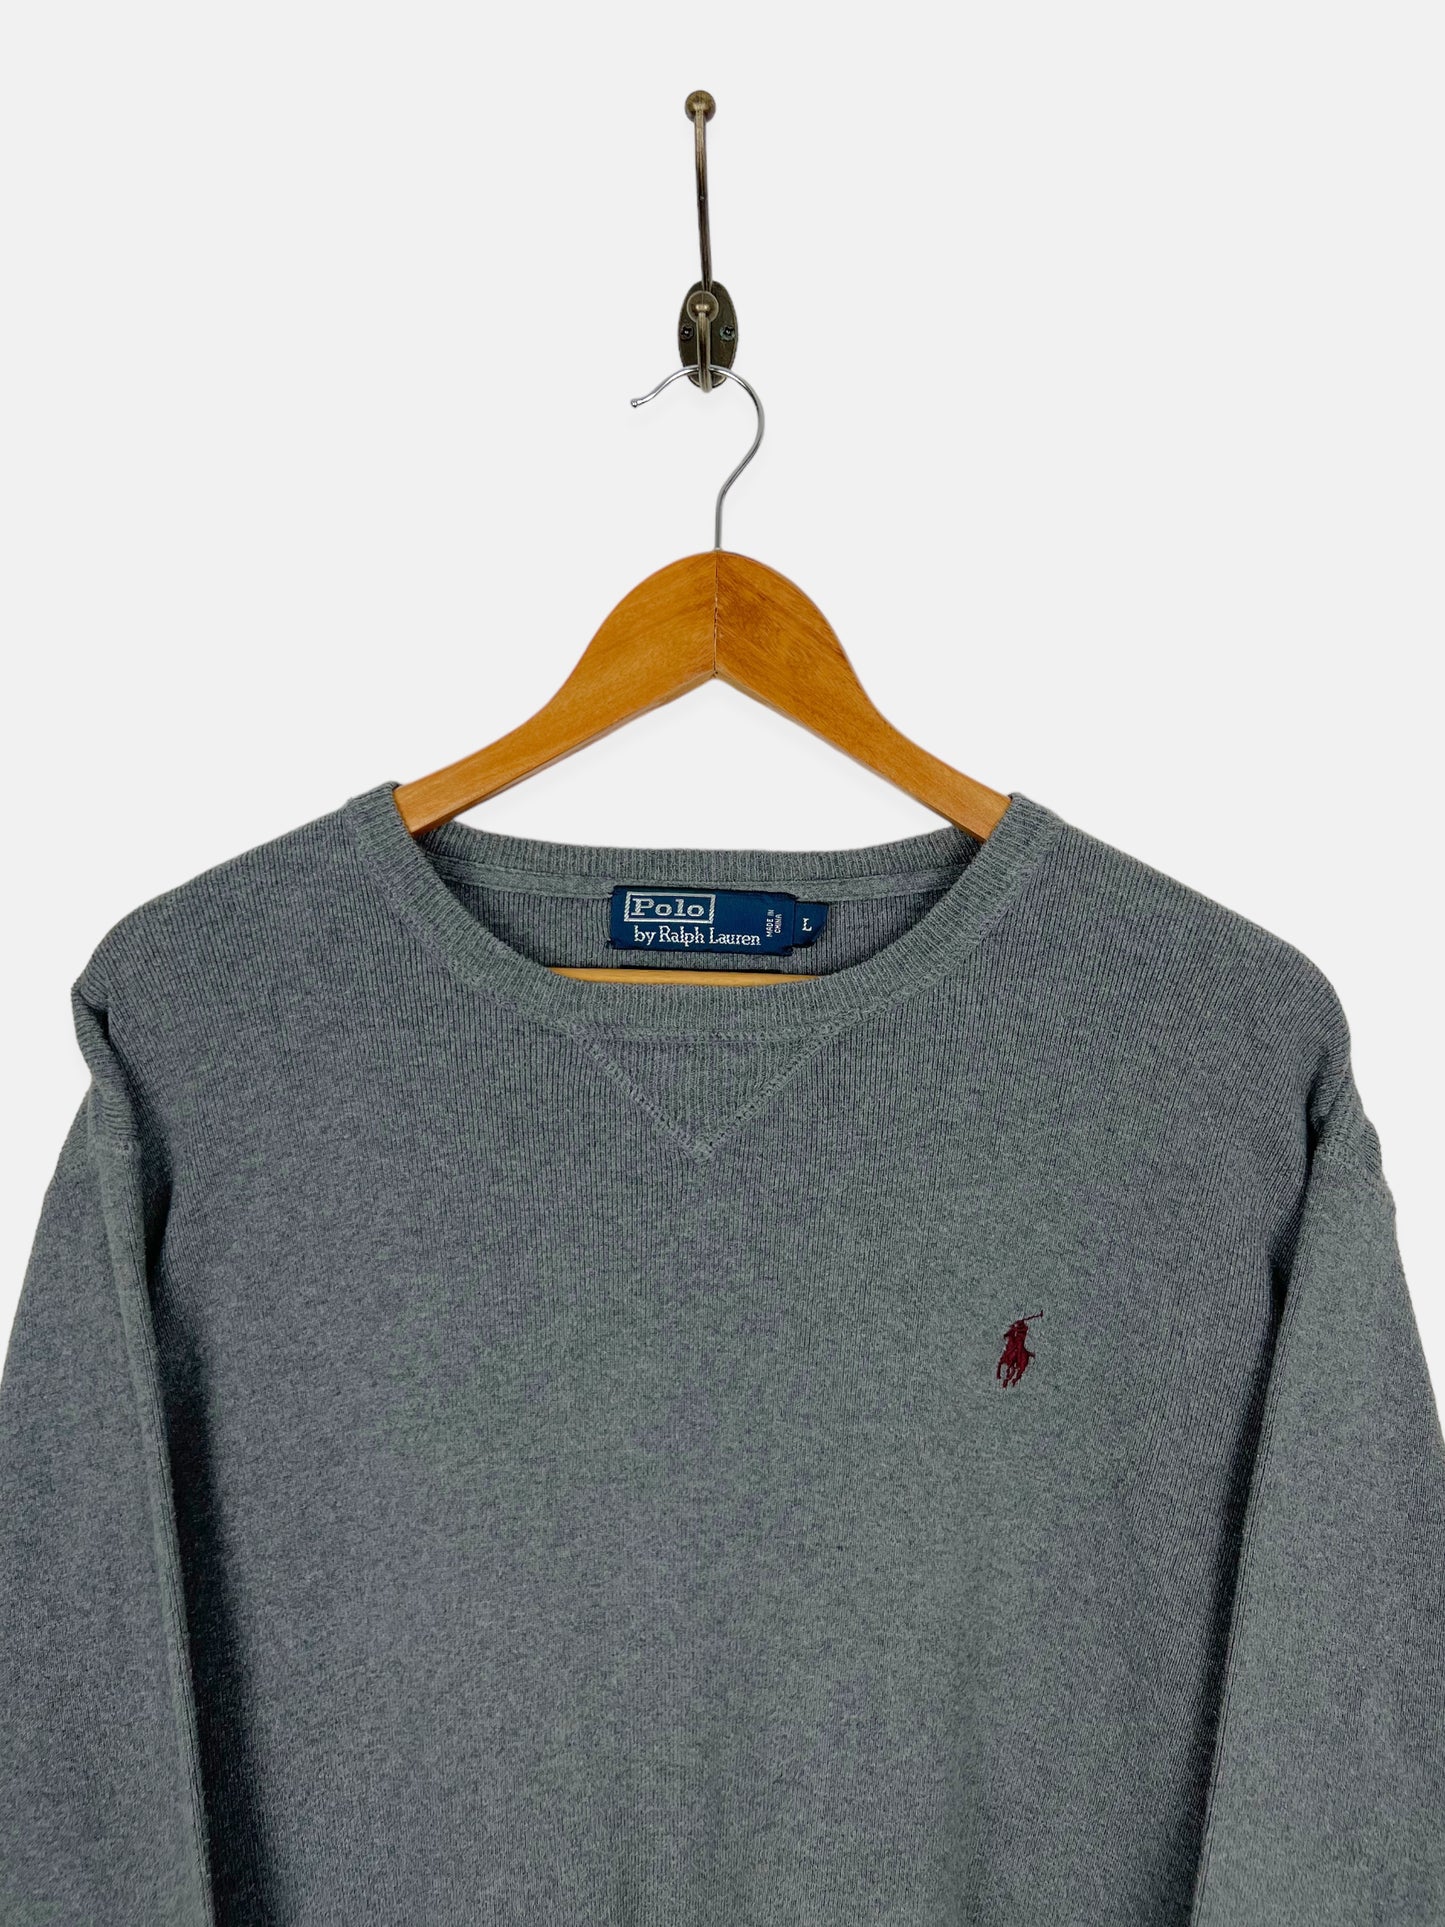 90's Ralph Lauren Embroidered Vintage Sweatshirt Size 10-12